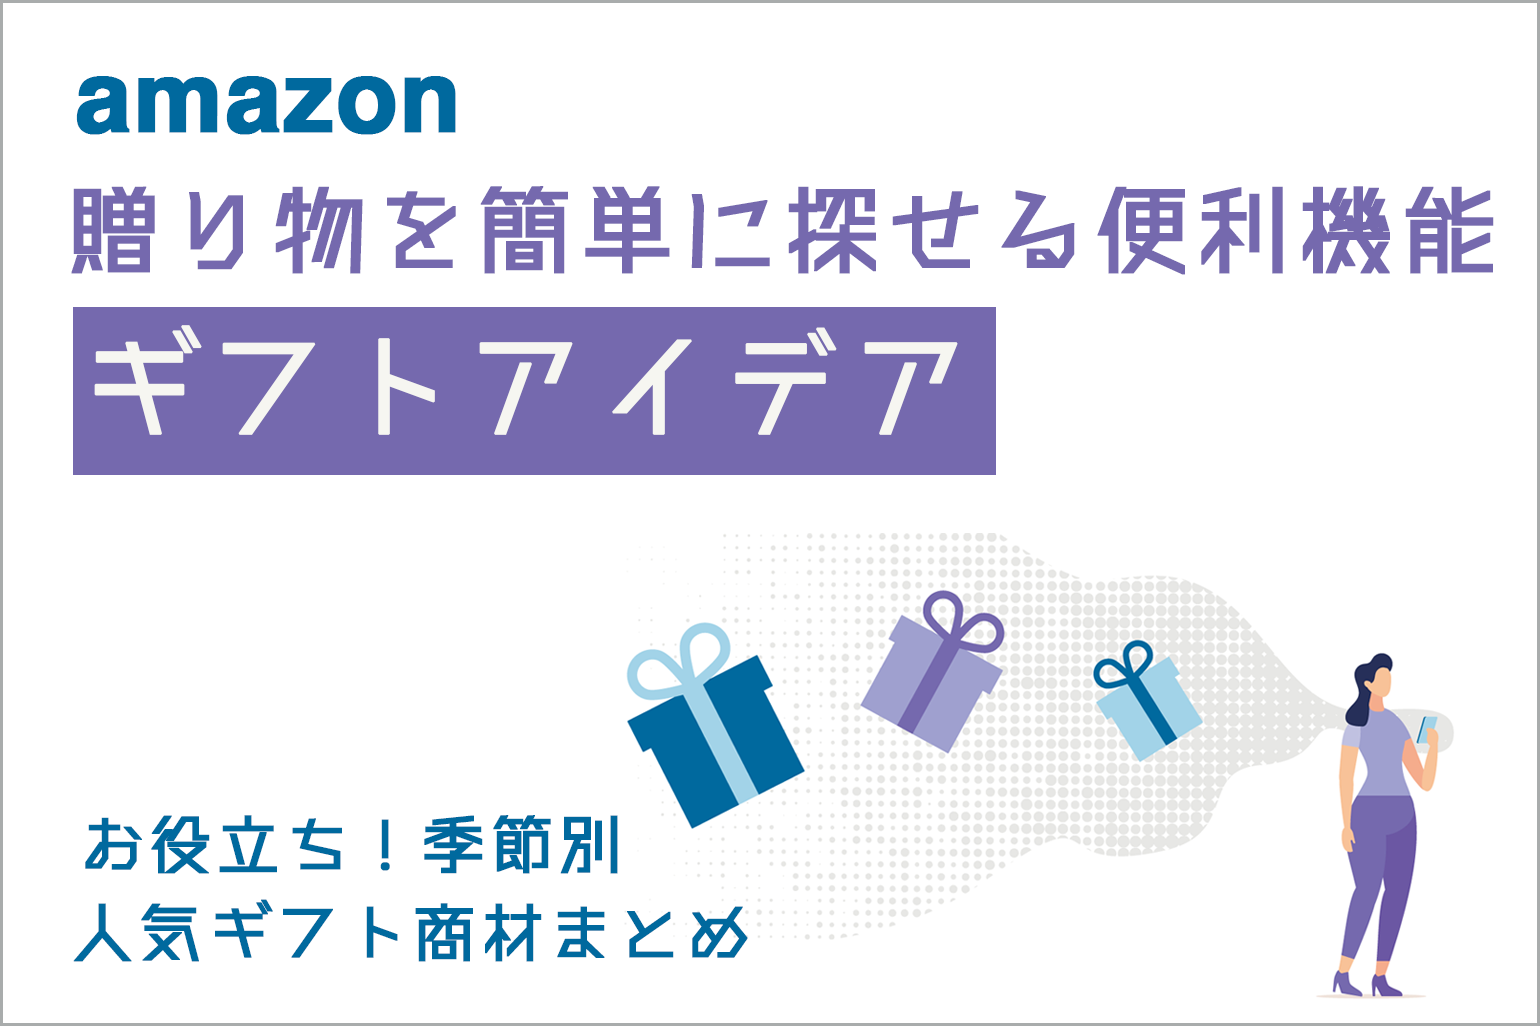 amazon_贈り物探しの便利機能「ギフトアイデア」_季節別人気ギフト商材まとめ